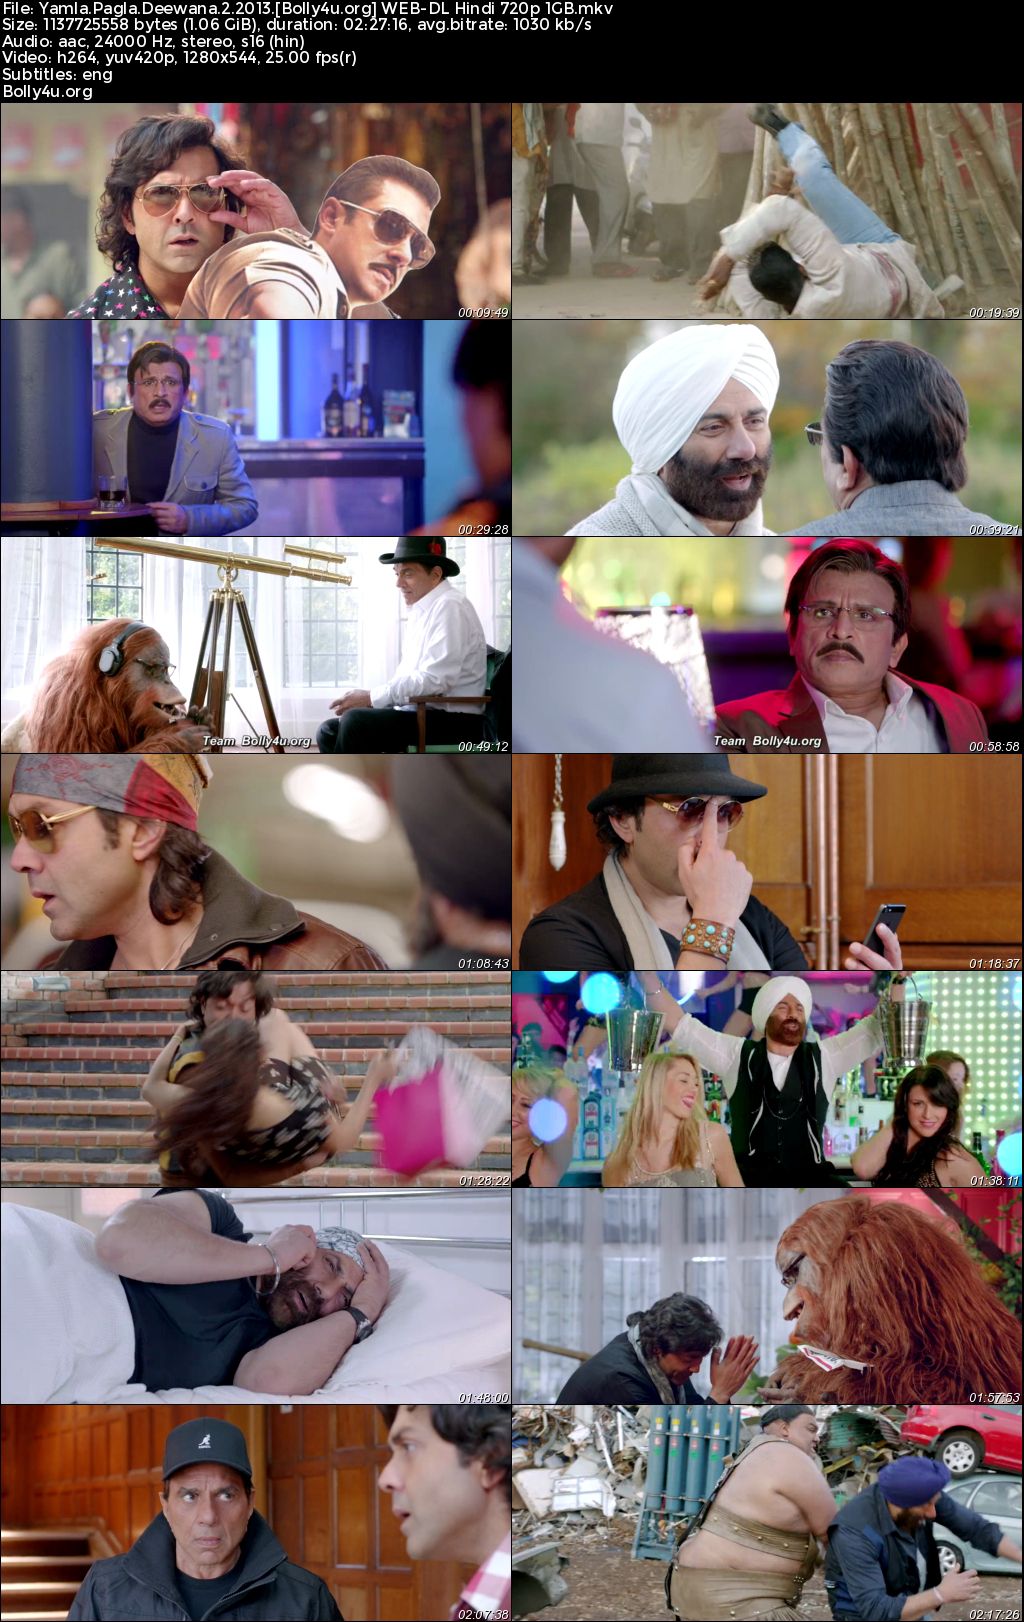 Yamla Pagla Deewana 2 2013 WEB-DL Hindi Full Movie Download 1080p 720p 480p